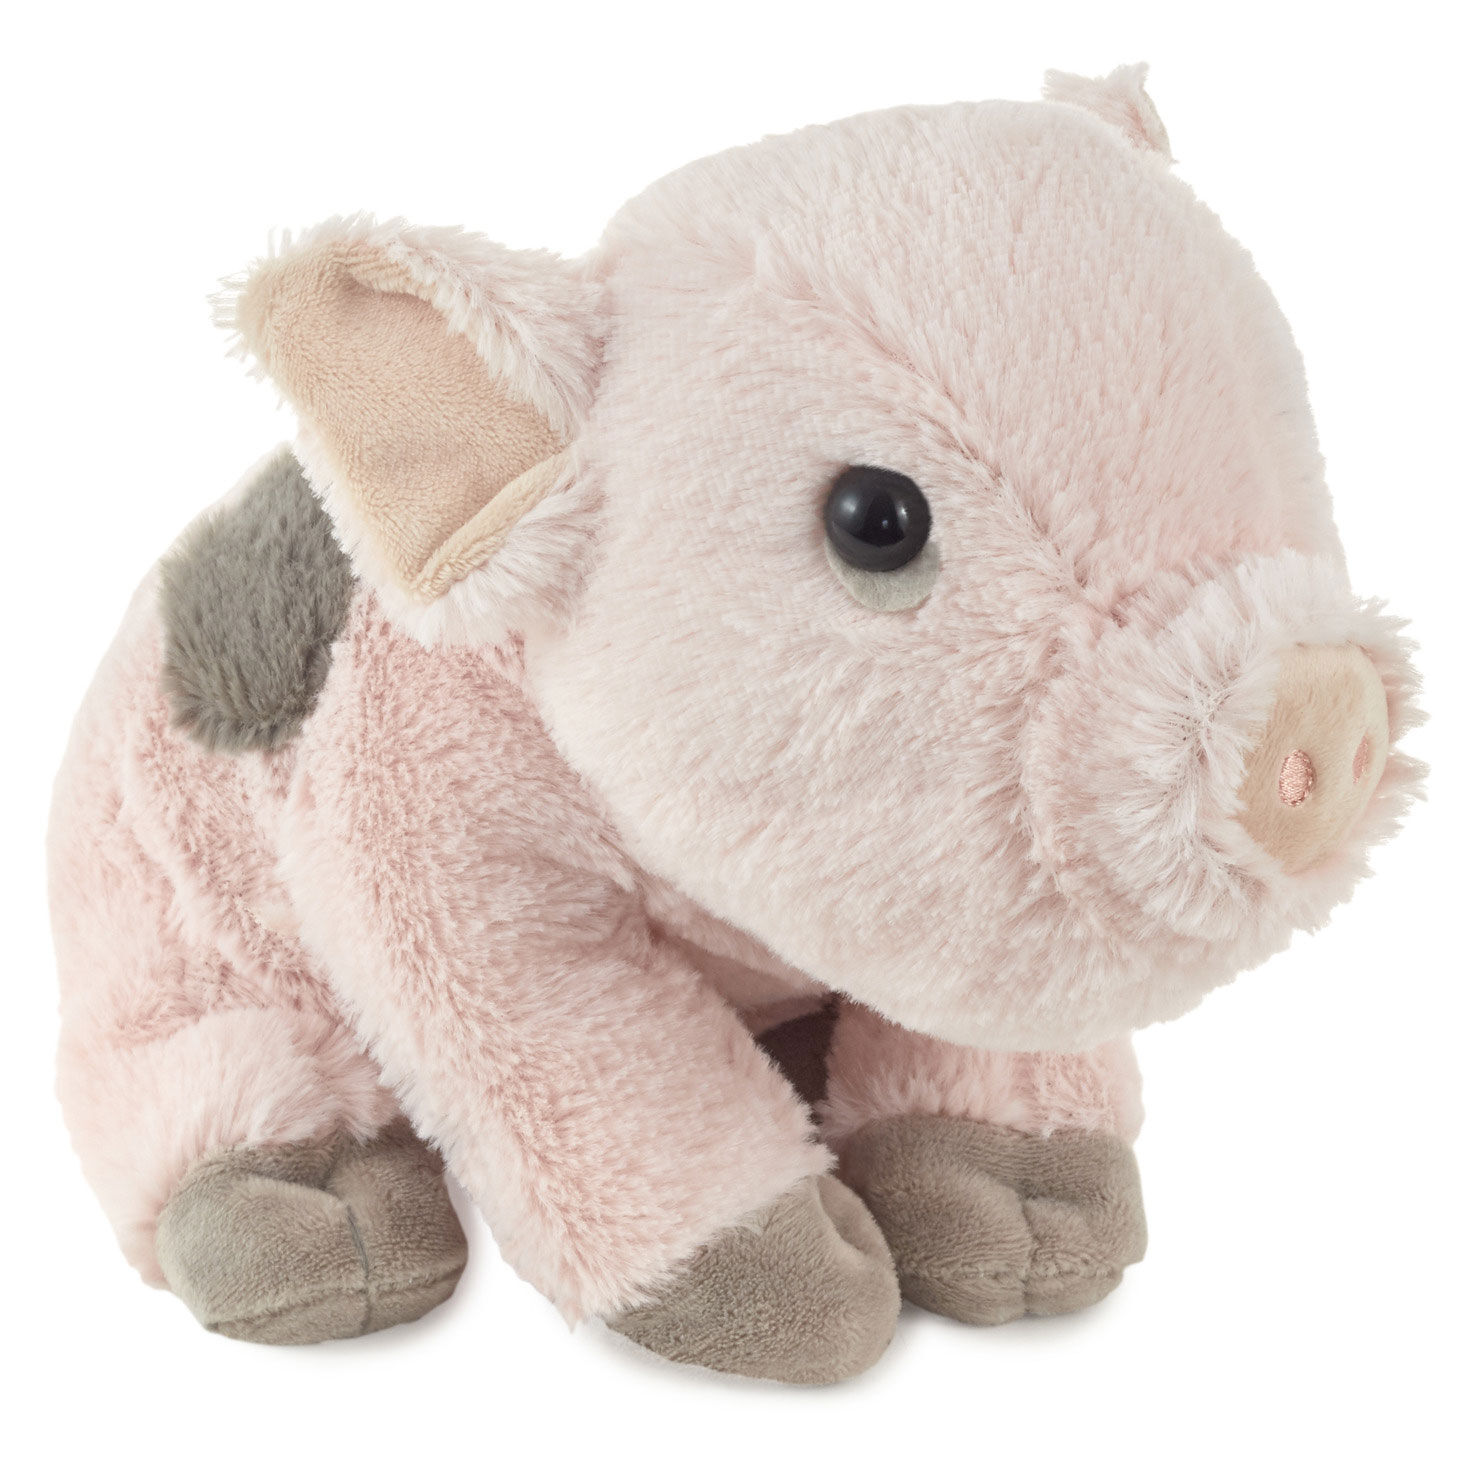 Baby Pig Stuffed Animal, 6" for only USD 18.99 | Hallmark